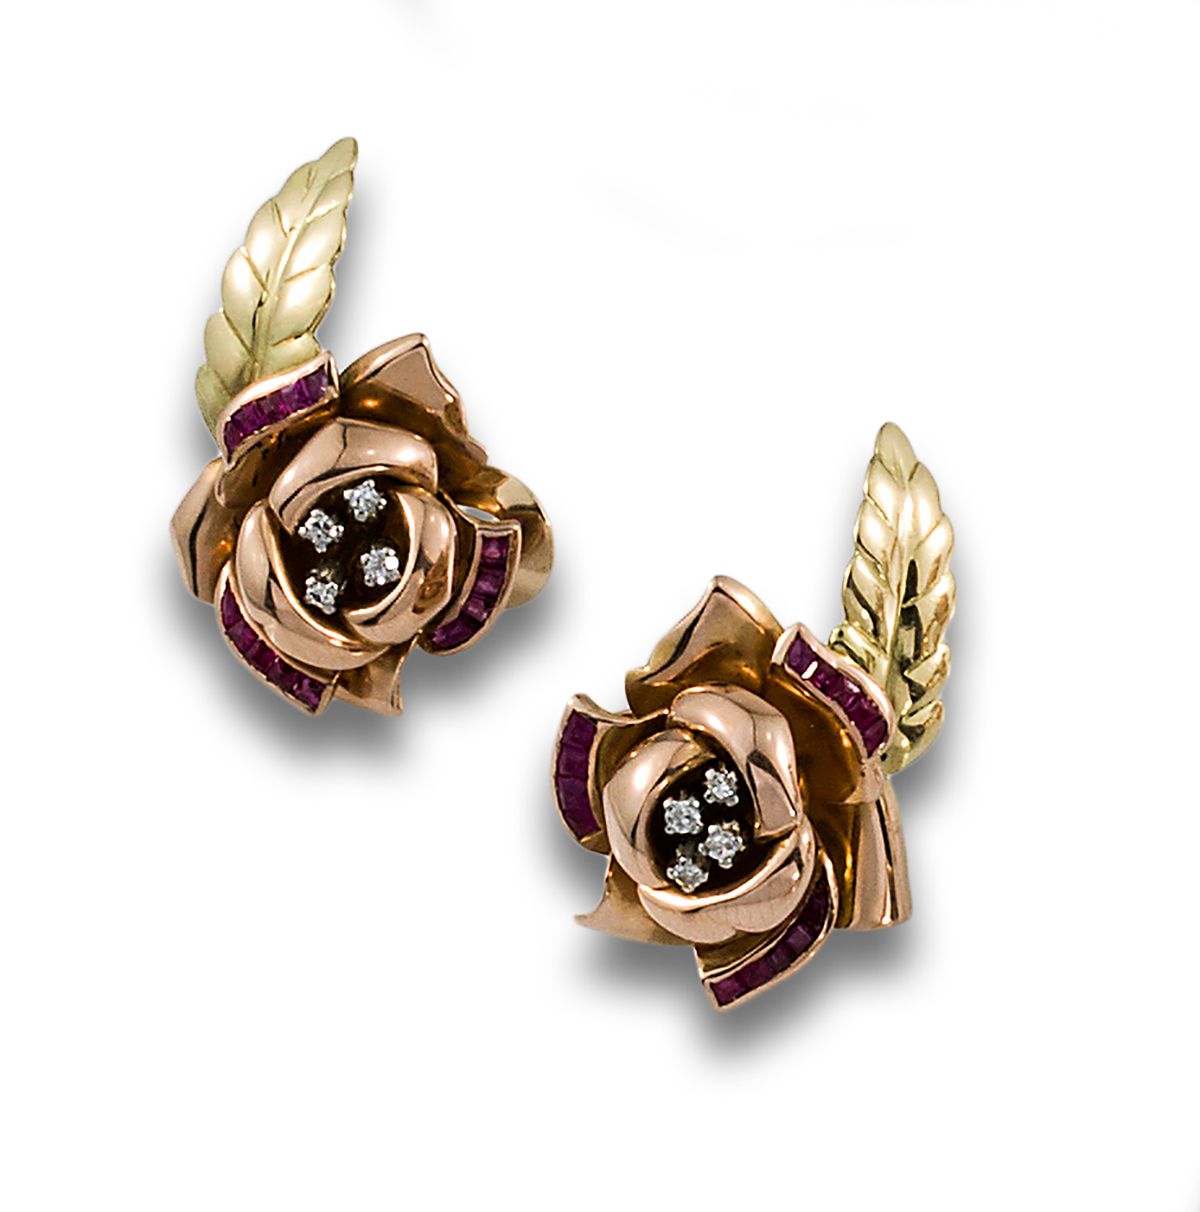 CHEVALIER GOLD DIAMOND RUBY EARRINGS Chevalier耳环，18K黄金、粉红和白金材质，镶嵌钻石和合成红宝石 .